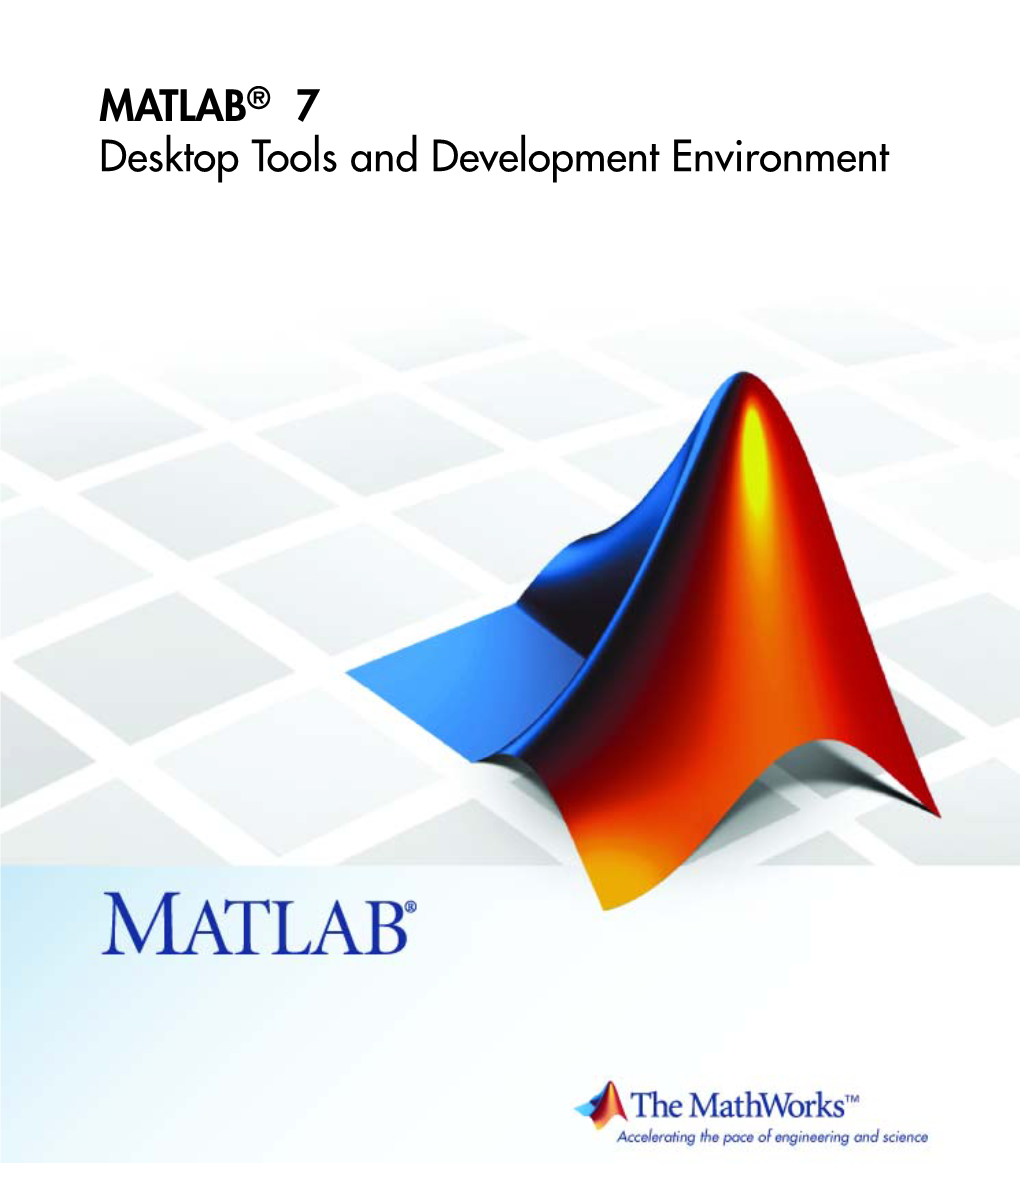 MATLAB 7 Desktop Tools and Development Environment